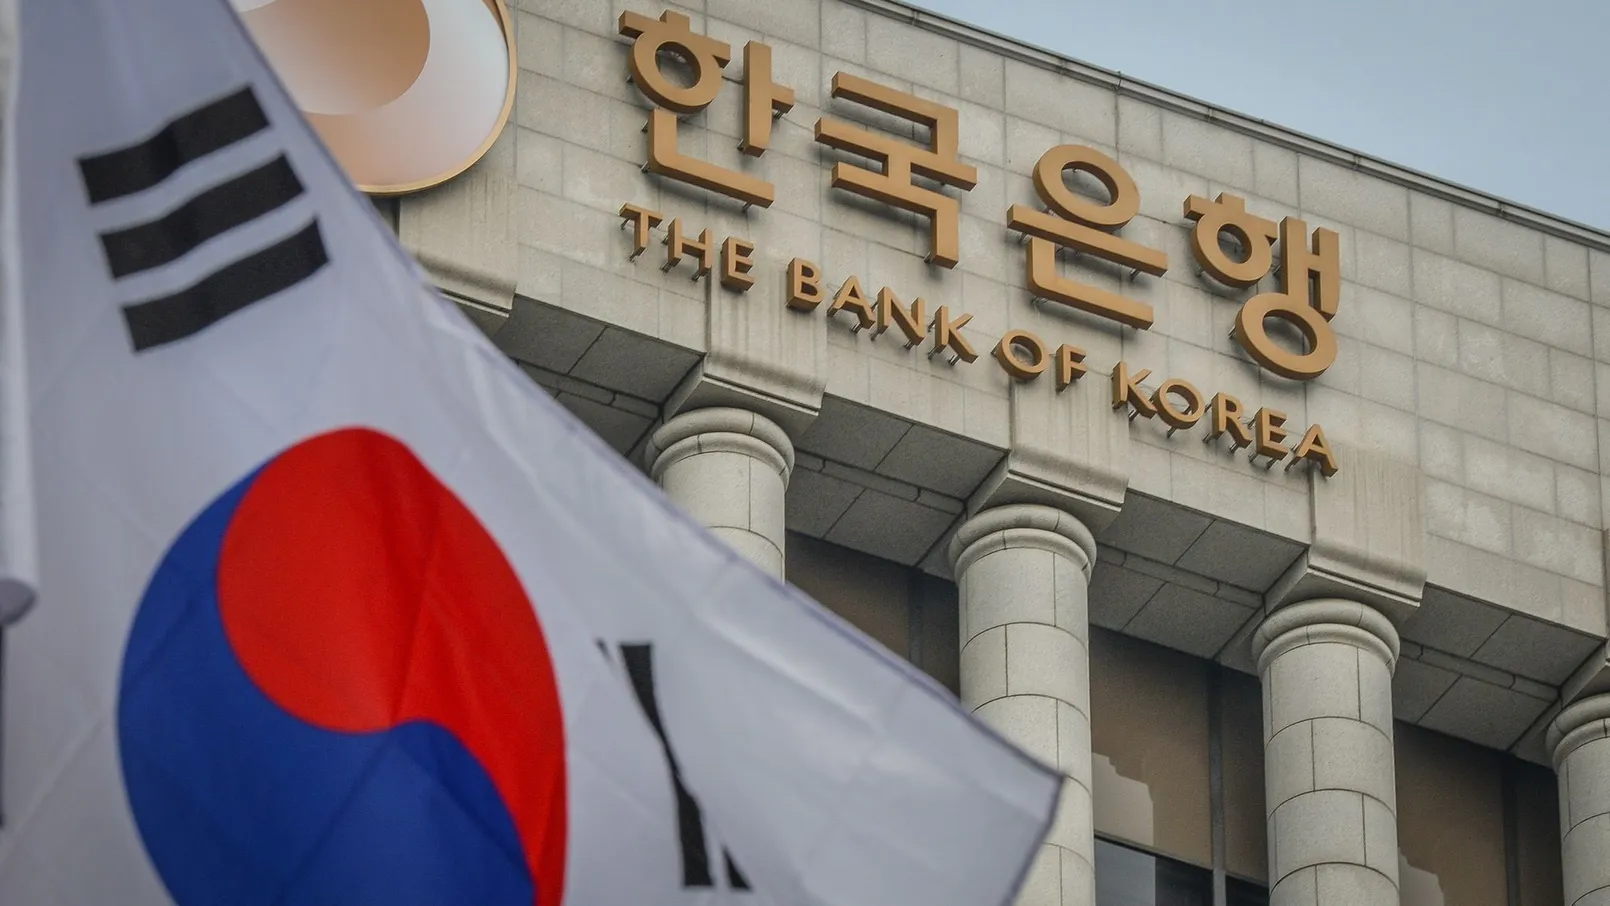 Bank of Korea 1.jpg